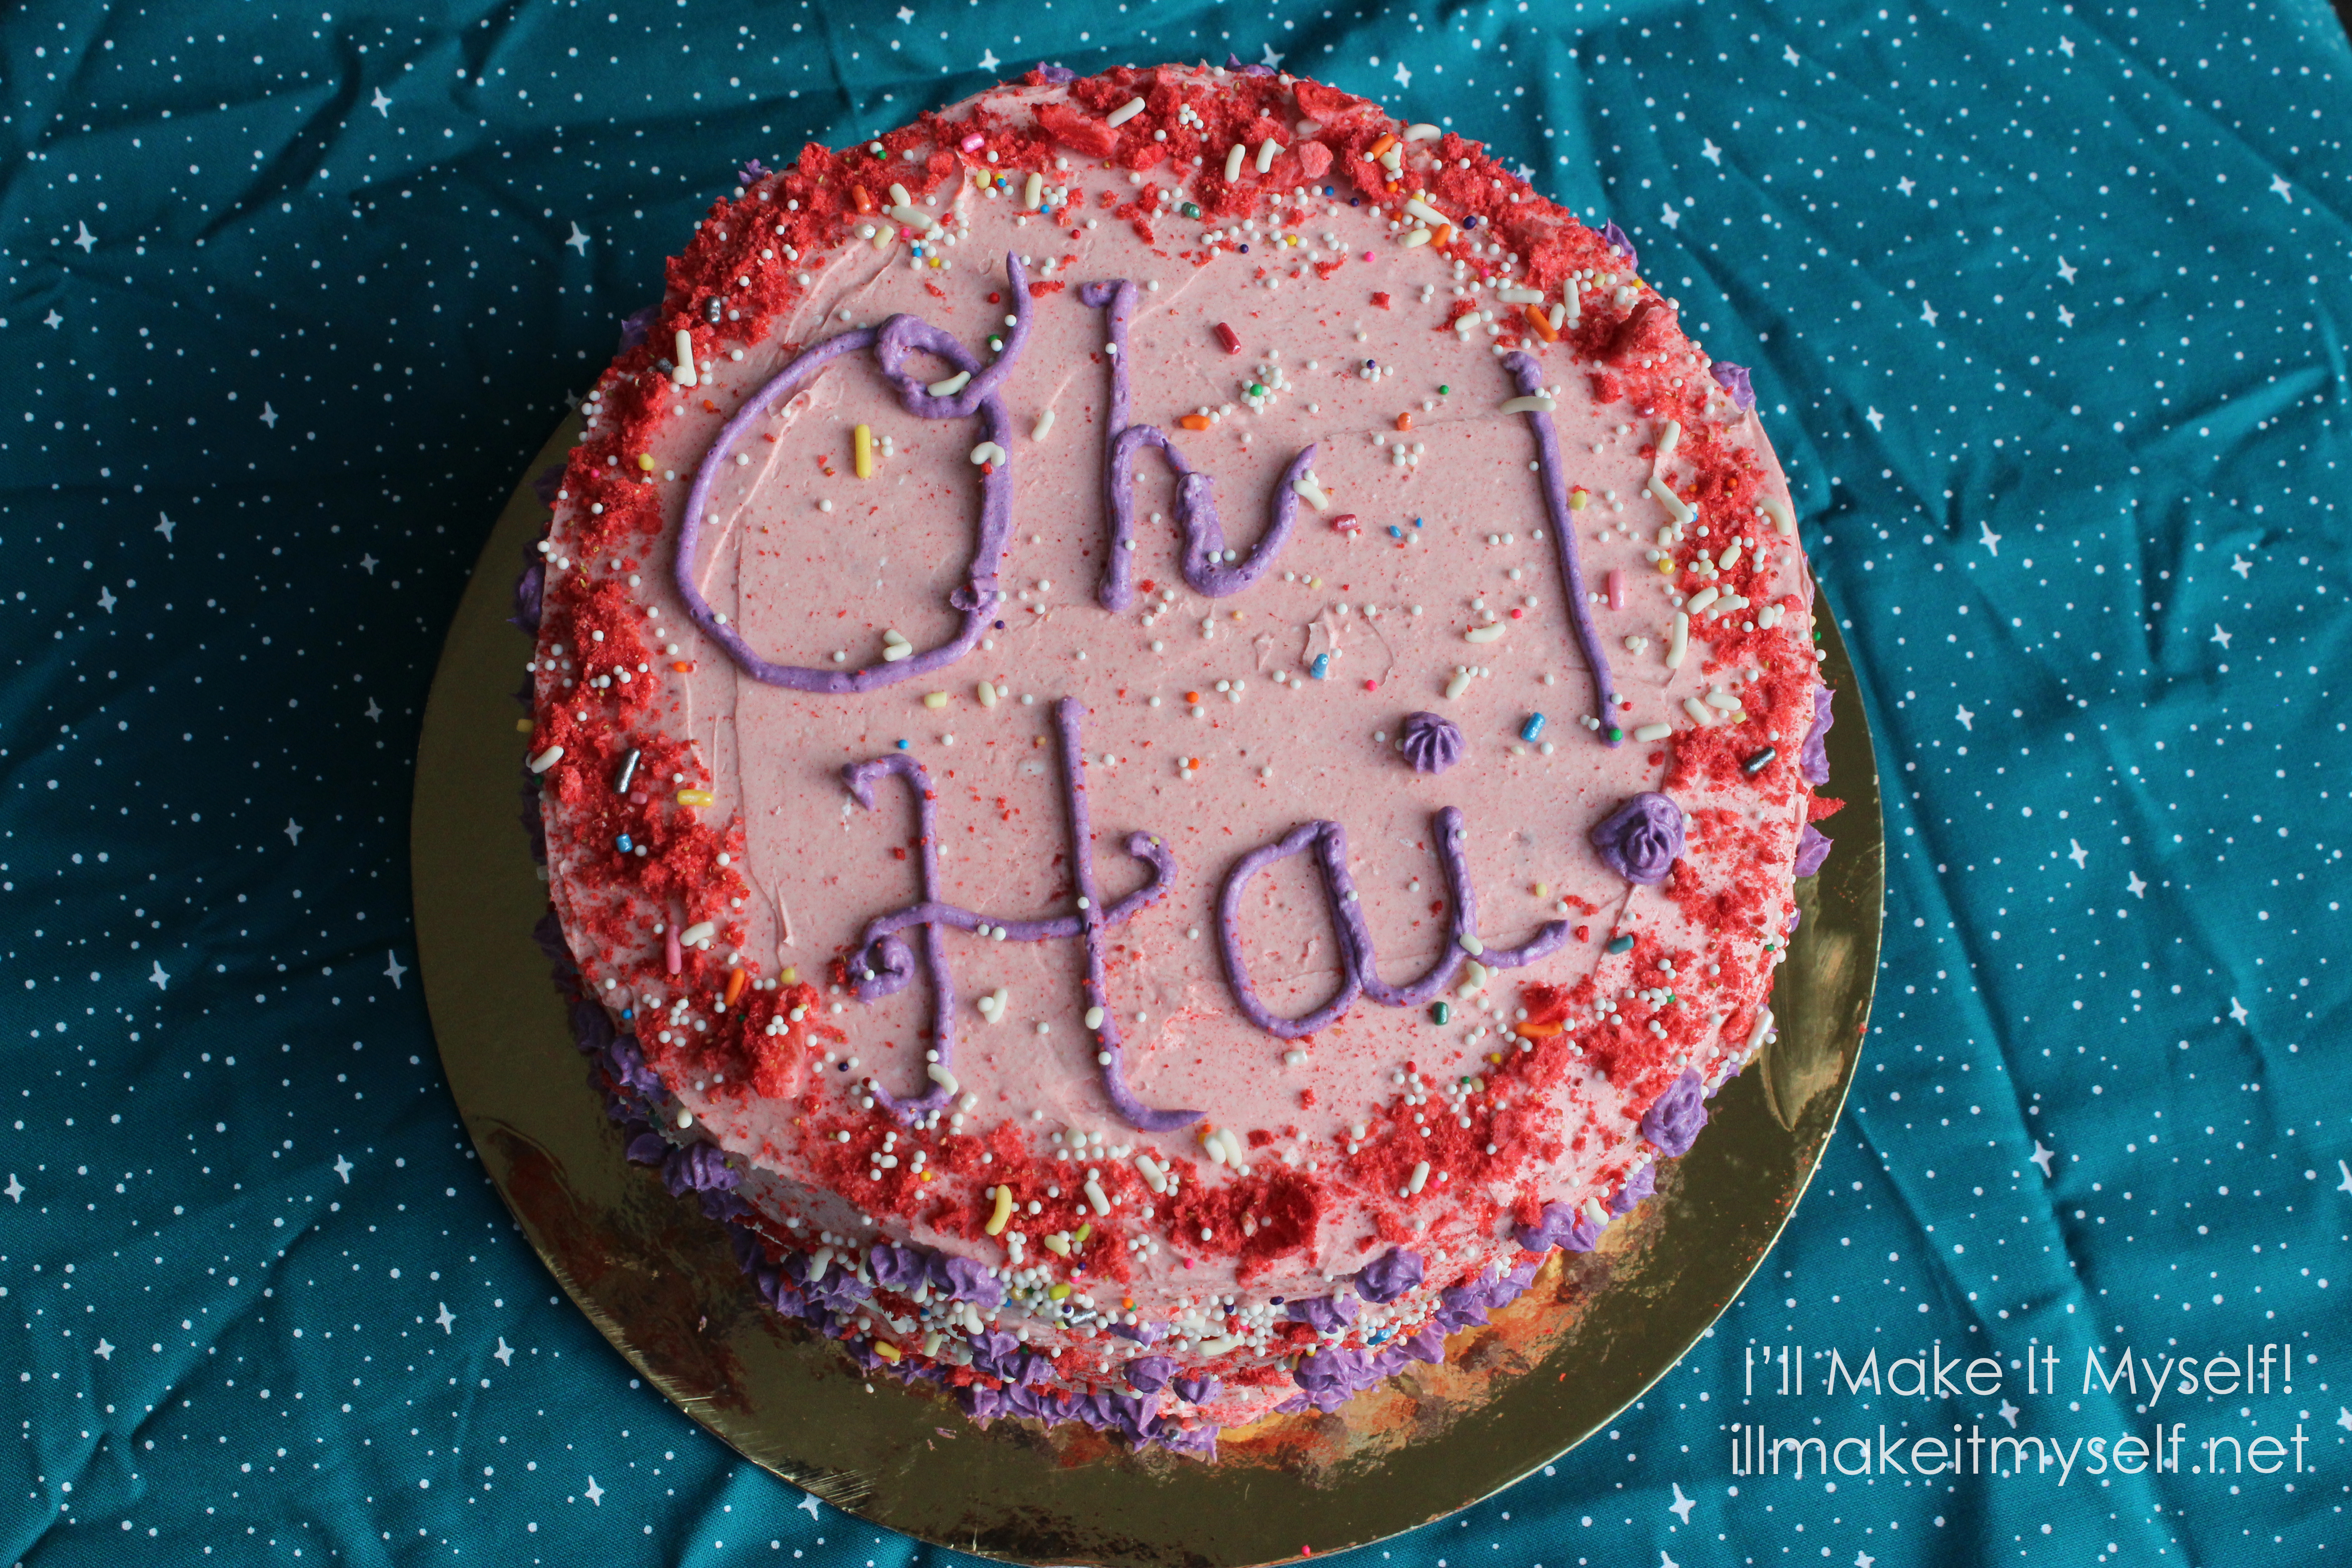 The Room on Cake 4: “Oh Hai!”